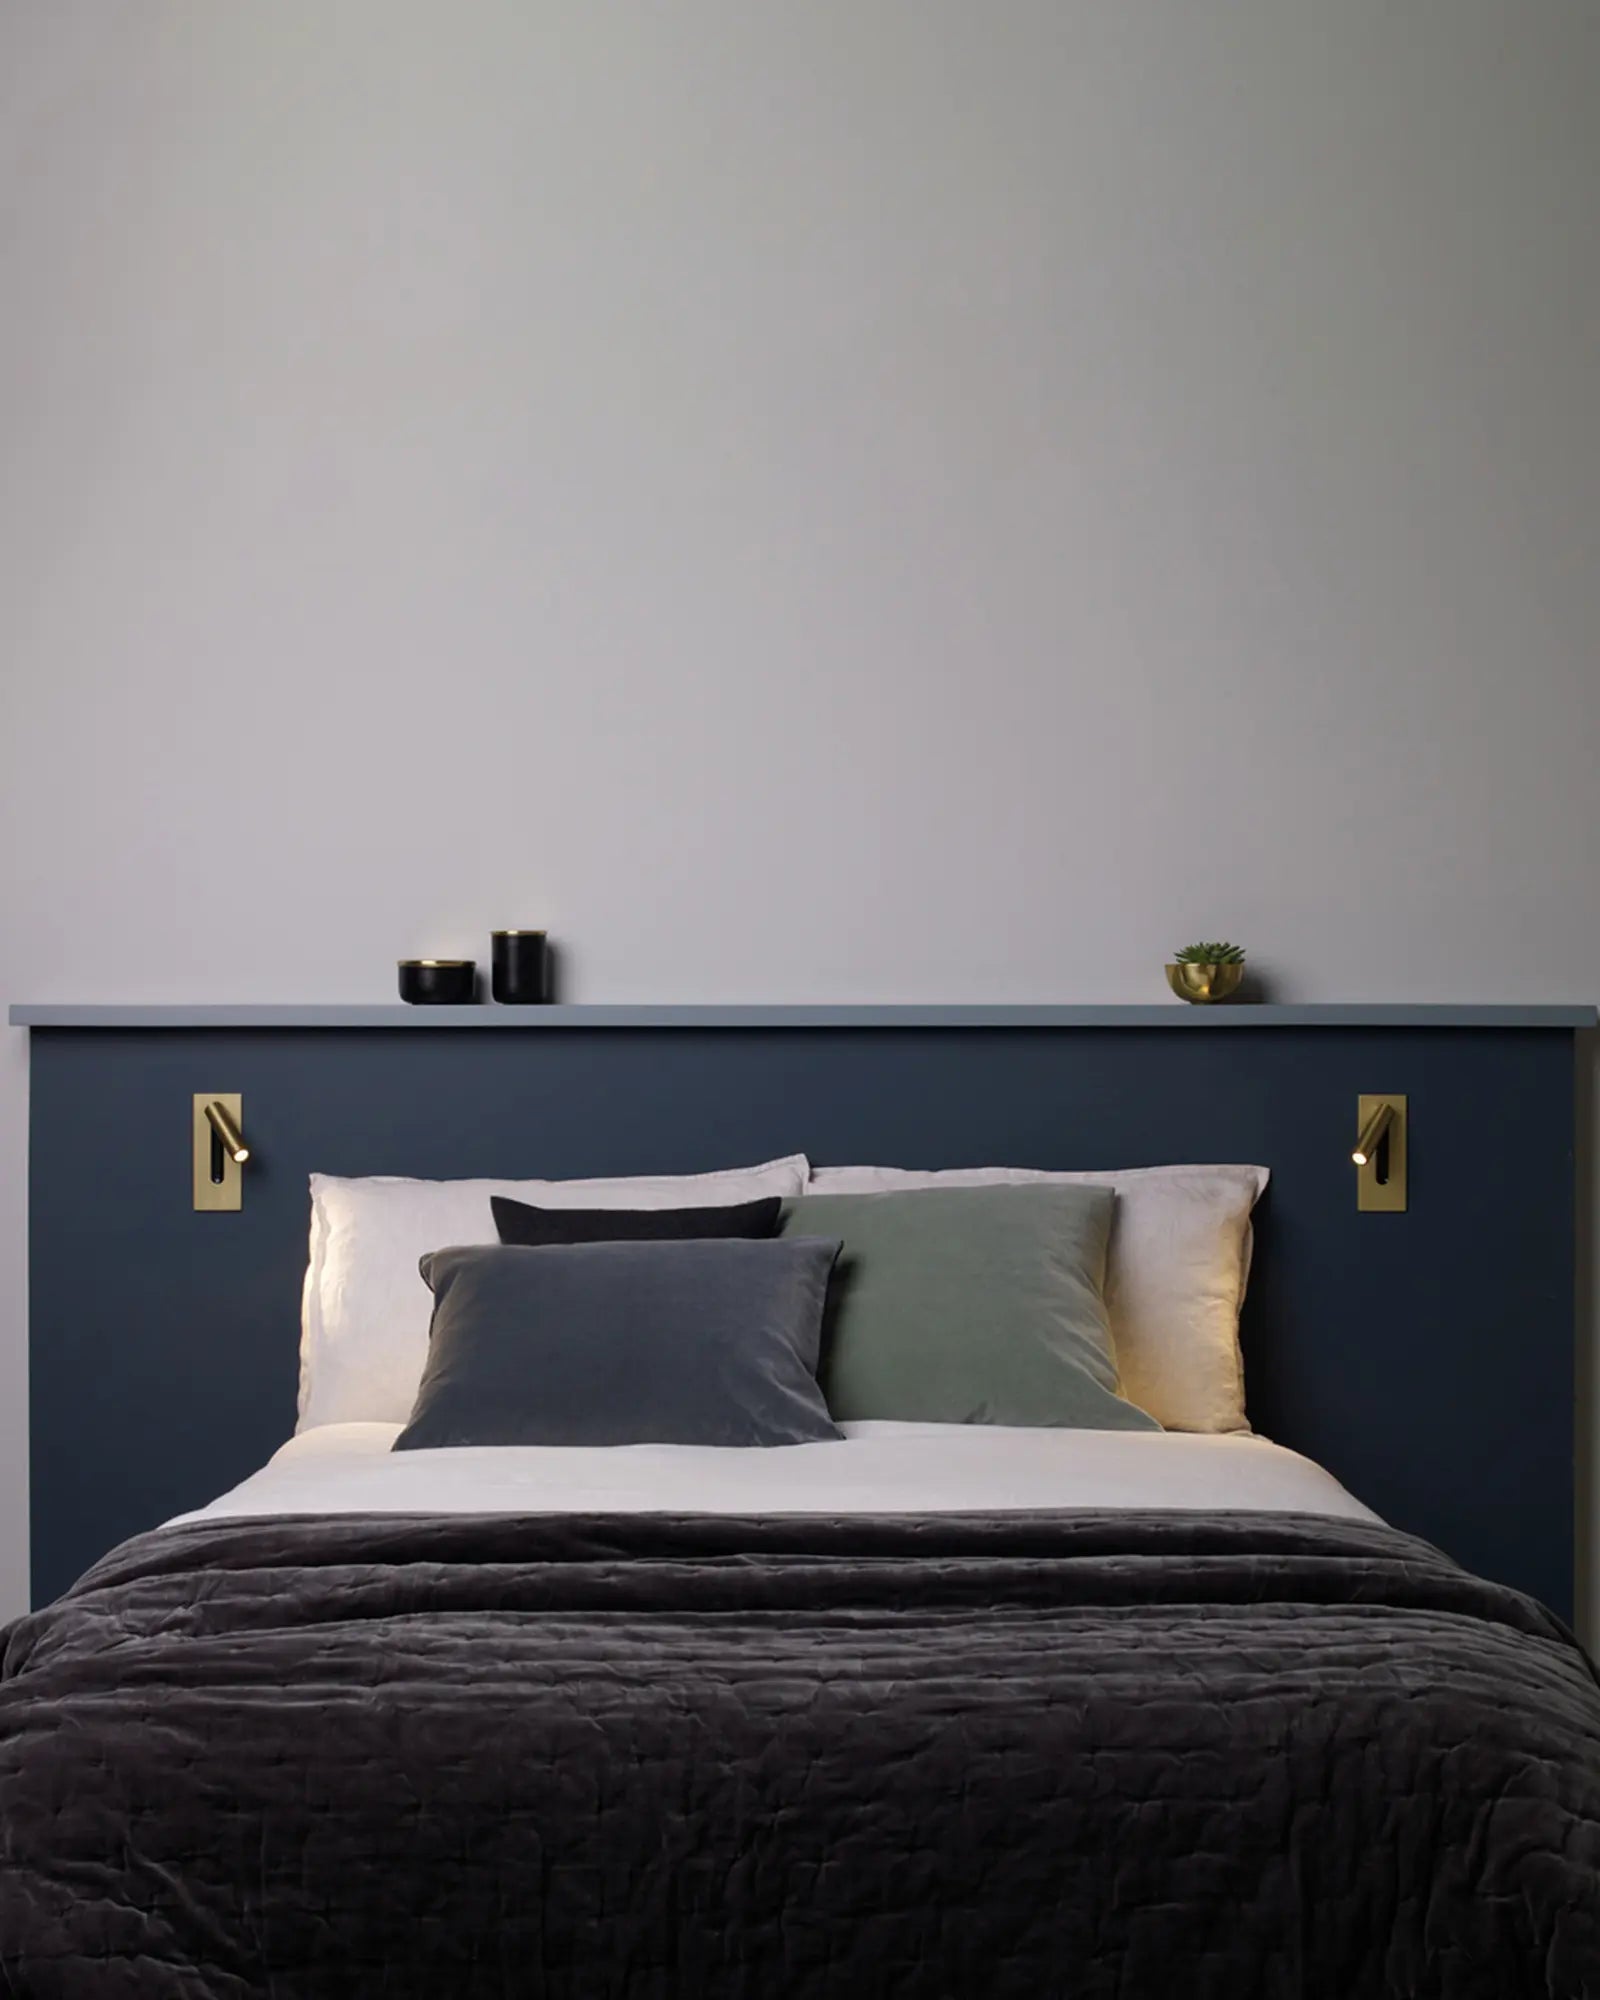 Fuse modern foldable minimal wall light bed head